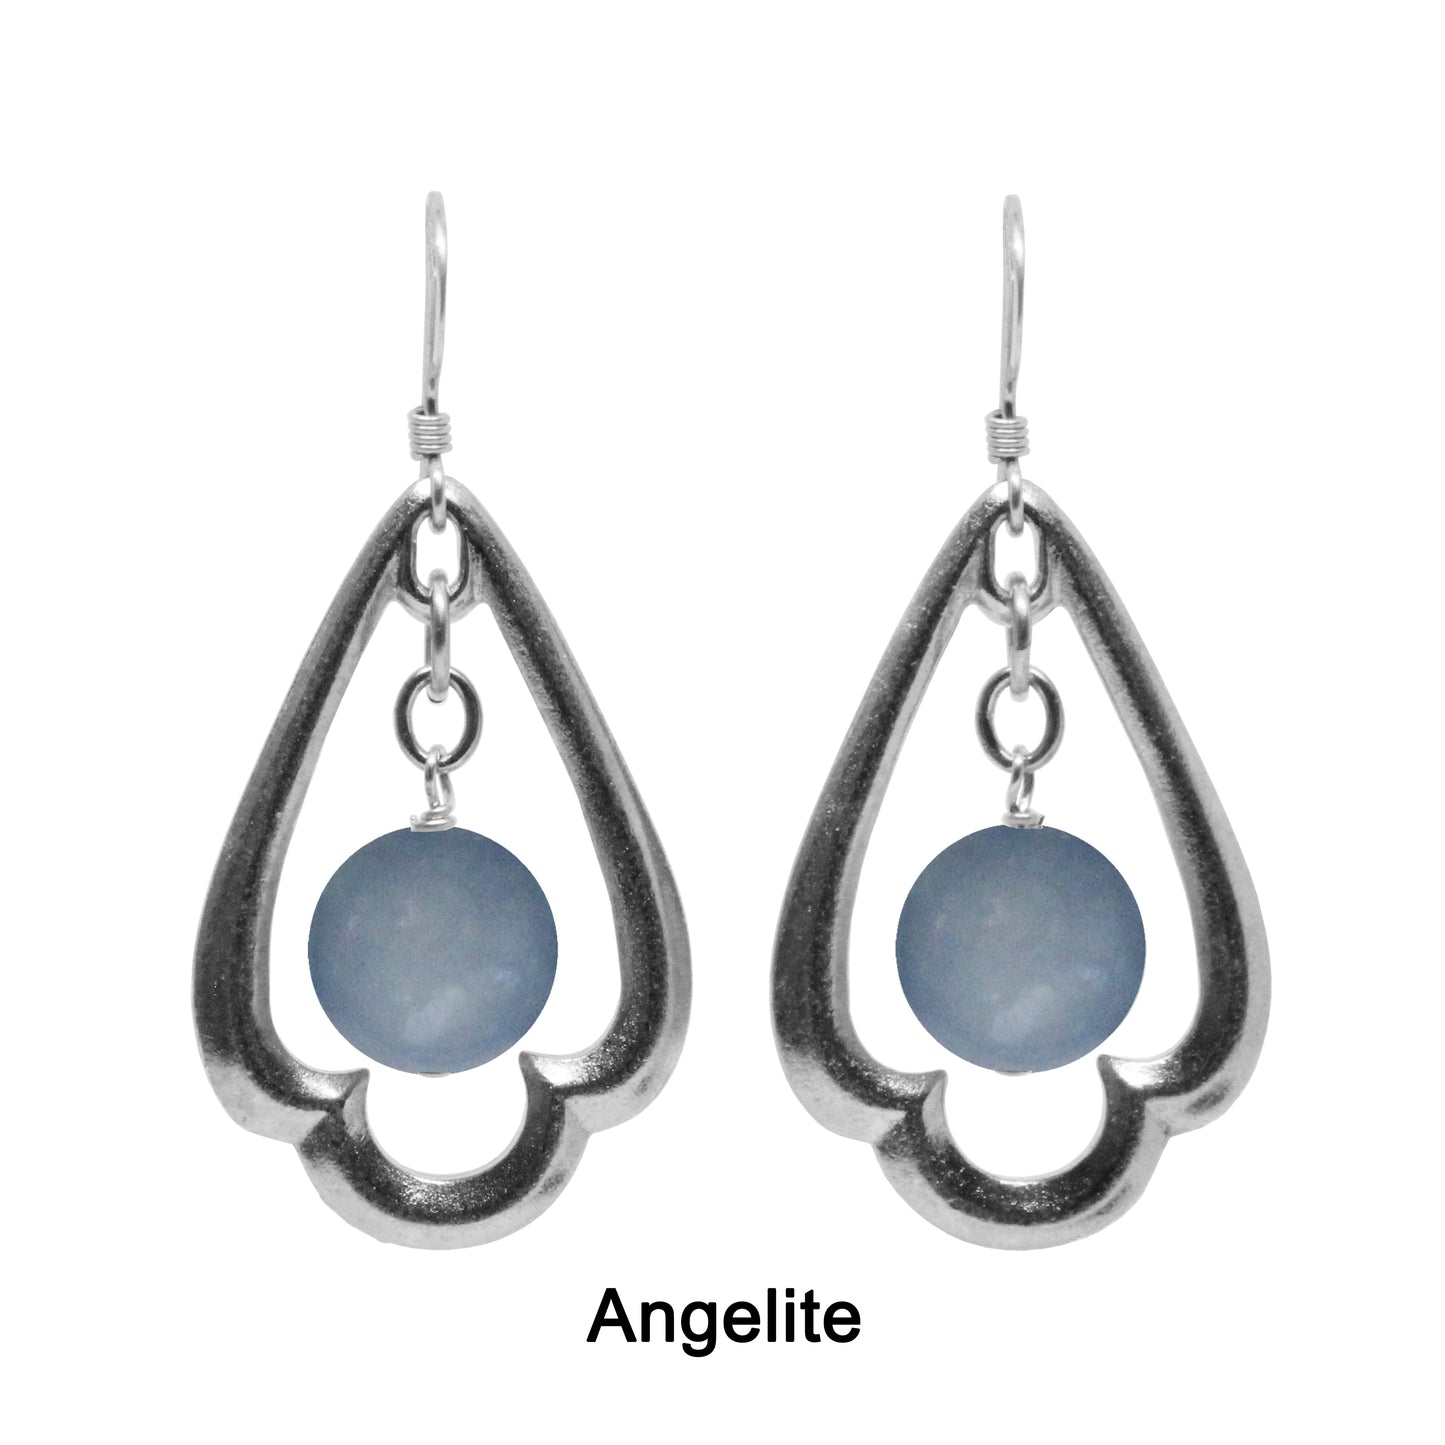 Trefoil Earrings / 45mm length / sterling silver earwires / choose from angelite, jade, carnelian, K2 granite, pink opal, turquoise